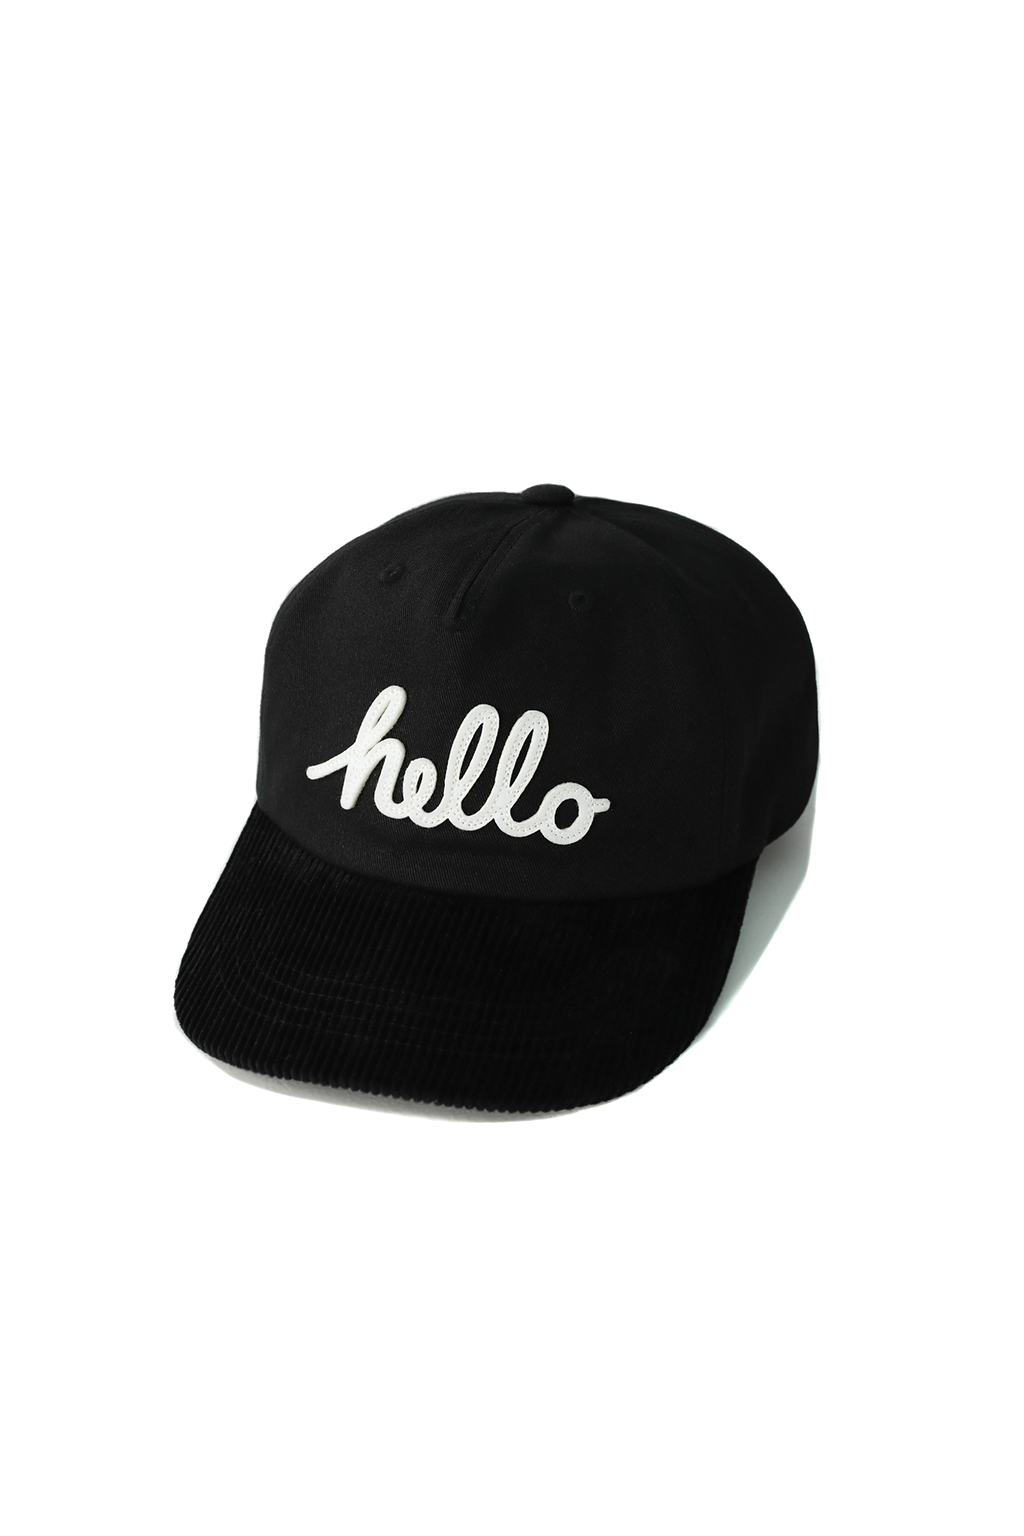 PARODY HELLO BALL CAP [BLACK]